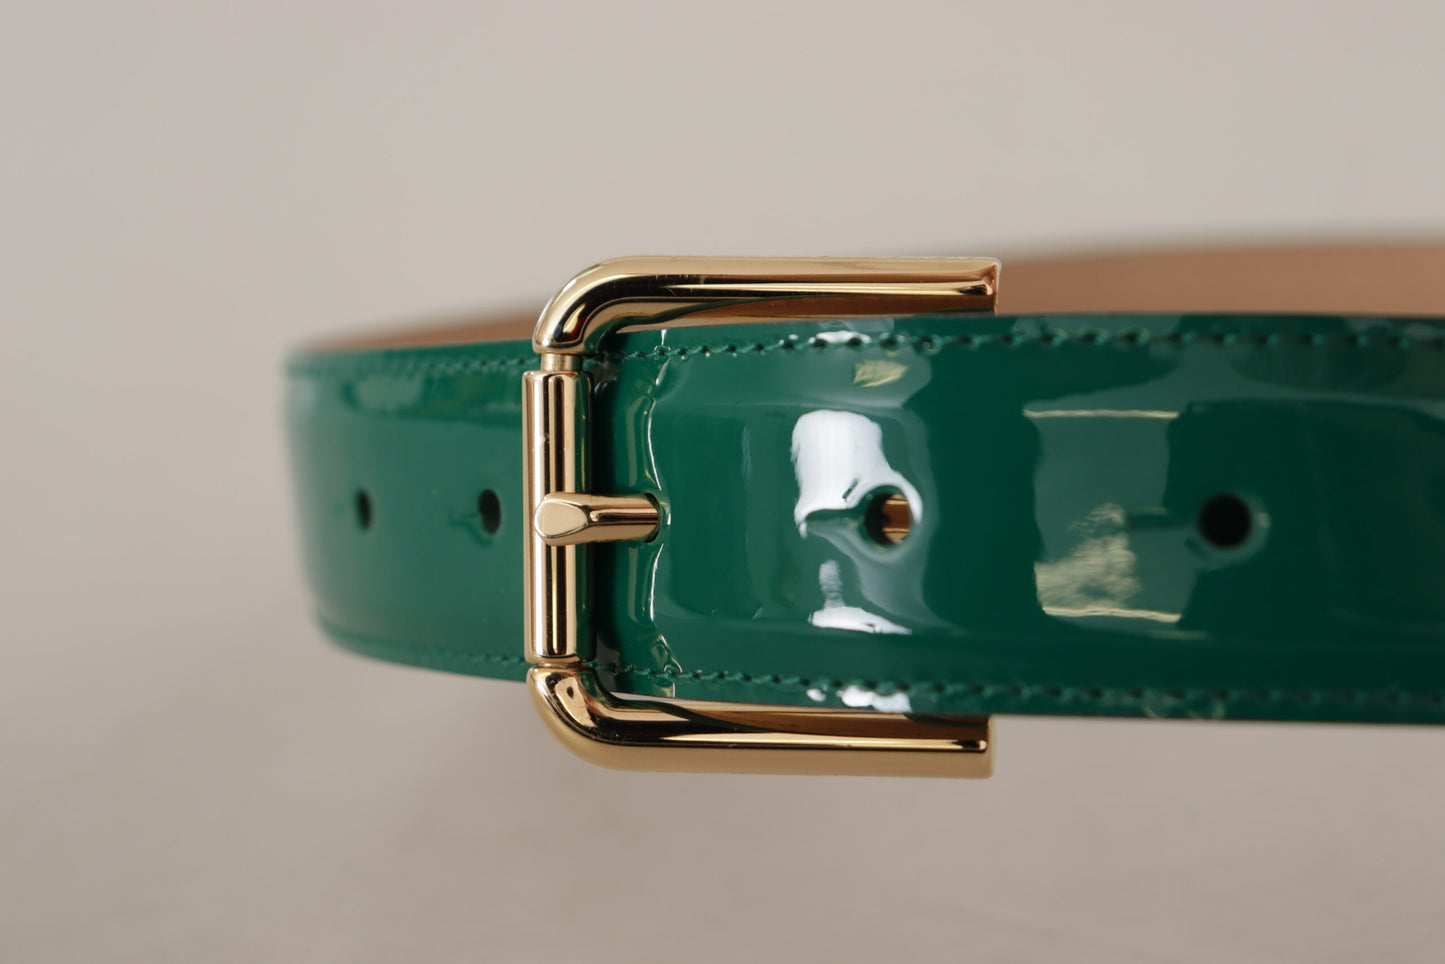 Dolce & Gabbana Green Belved Logo in pelle Cintura incisa